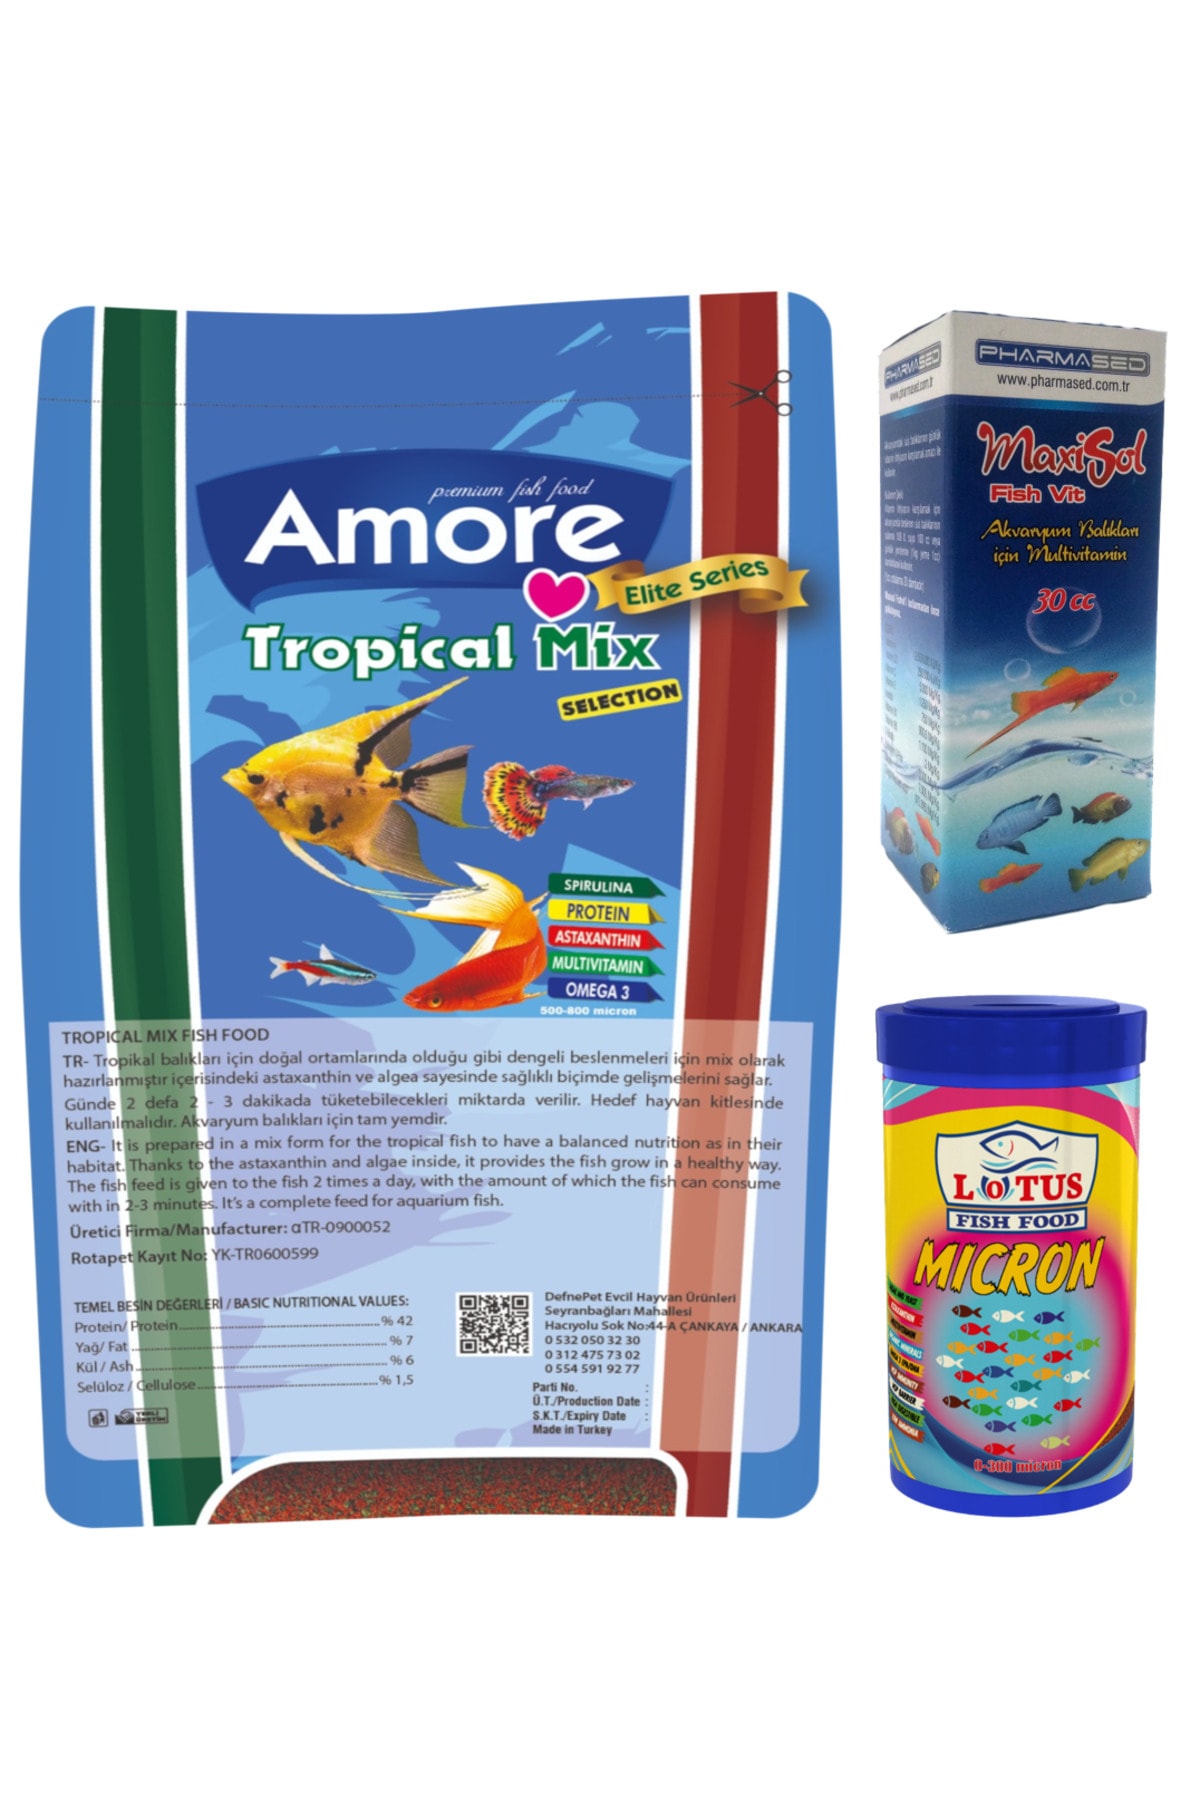 Amore Tropical Mix Lepistes Canli Doguran Tropikal Yemi 460gr, Micron Yavru Buyutme 100ml, Balik Vitamini